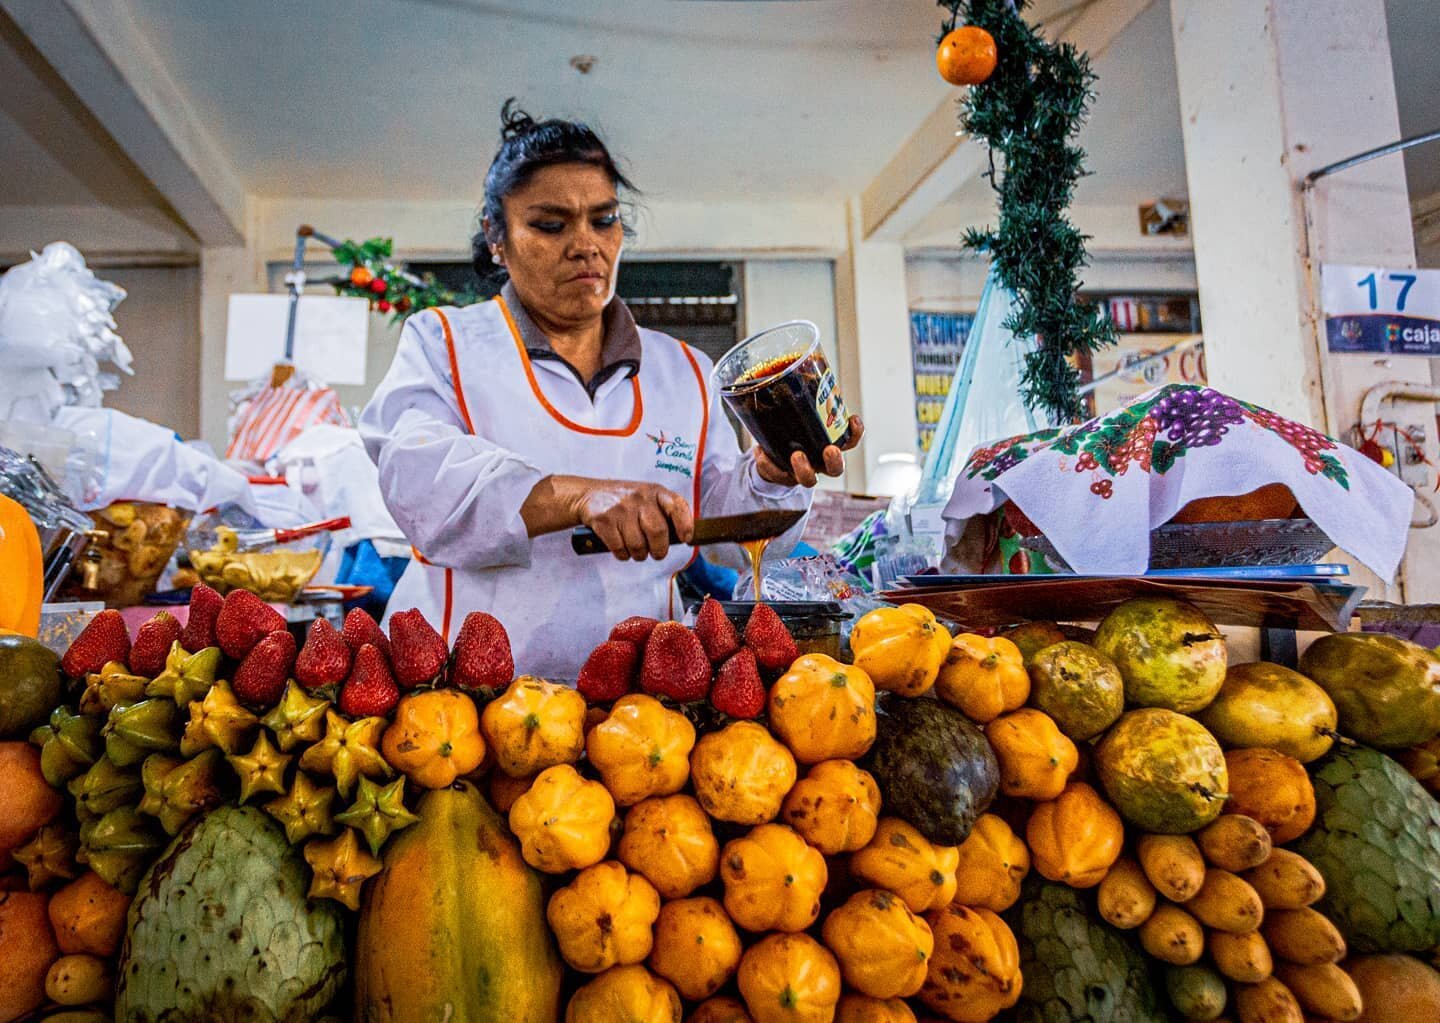 Fruit stall in Arequipa. .
.
.
.
.
.
.
.
.
.
.
.
.
#natgeo  #natgeoyourshot  #machupicchu #travelperu  #travelperu🇵🇪 #traveltheworld #wanderlust  #travelsouthamerica #visitperu  #peruvianadventures  #peruvian  #lonelyplanetperu #lonelyplanet #globe